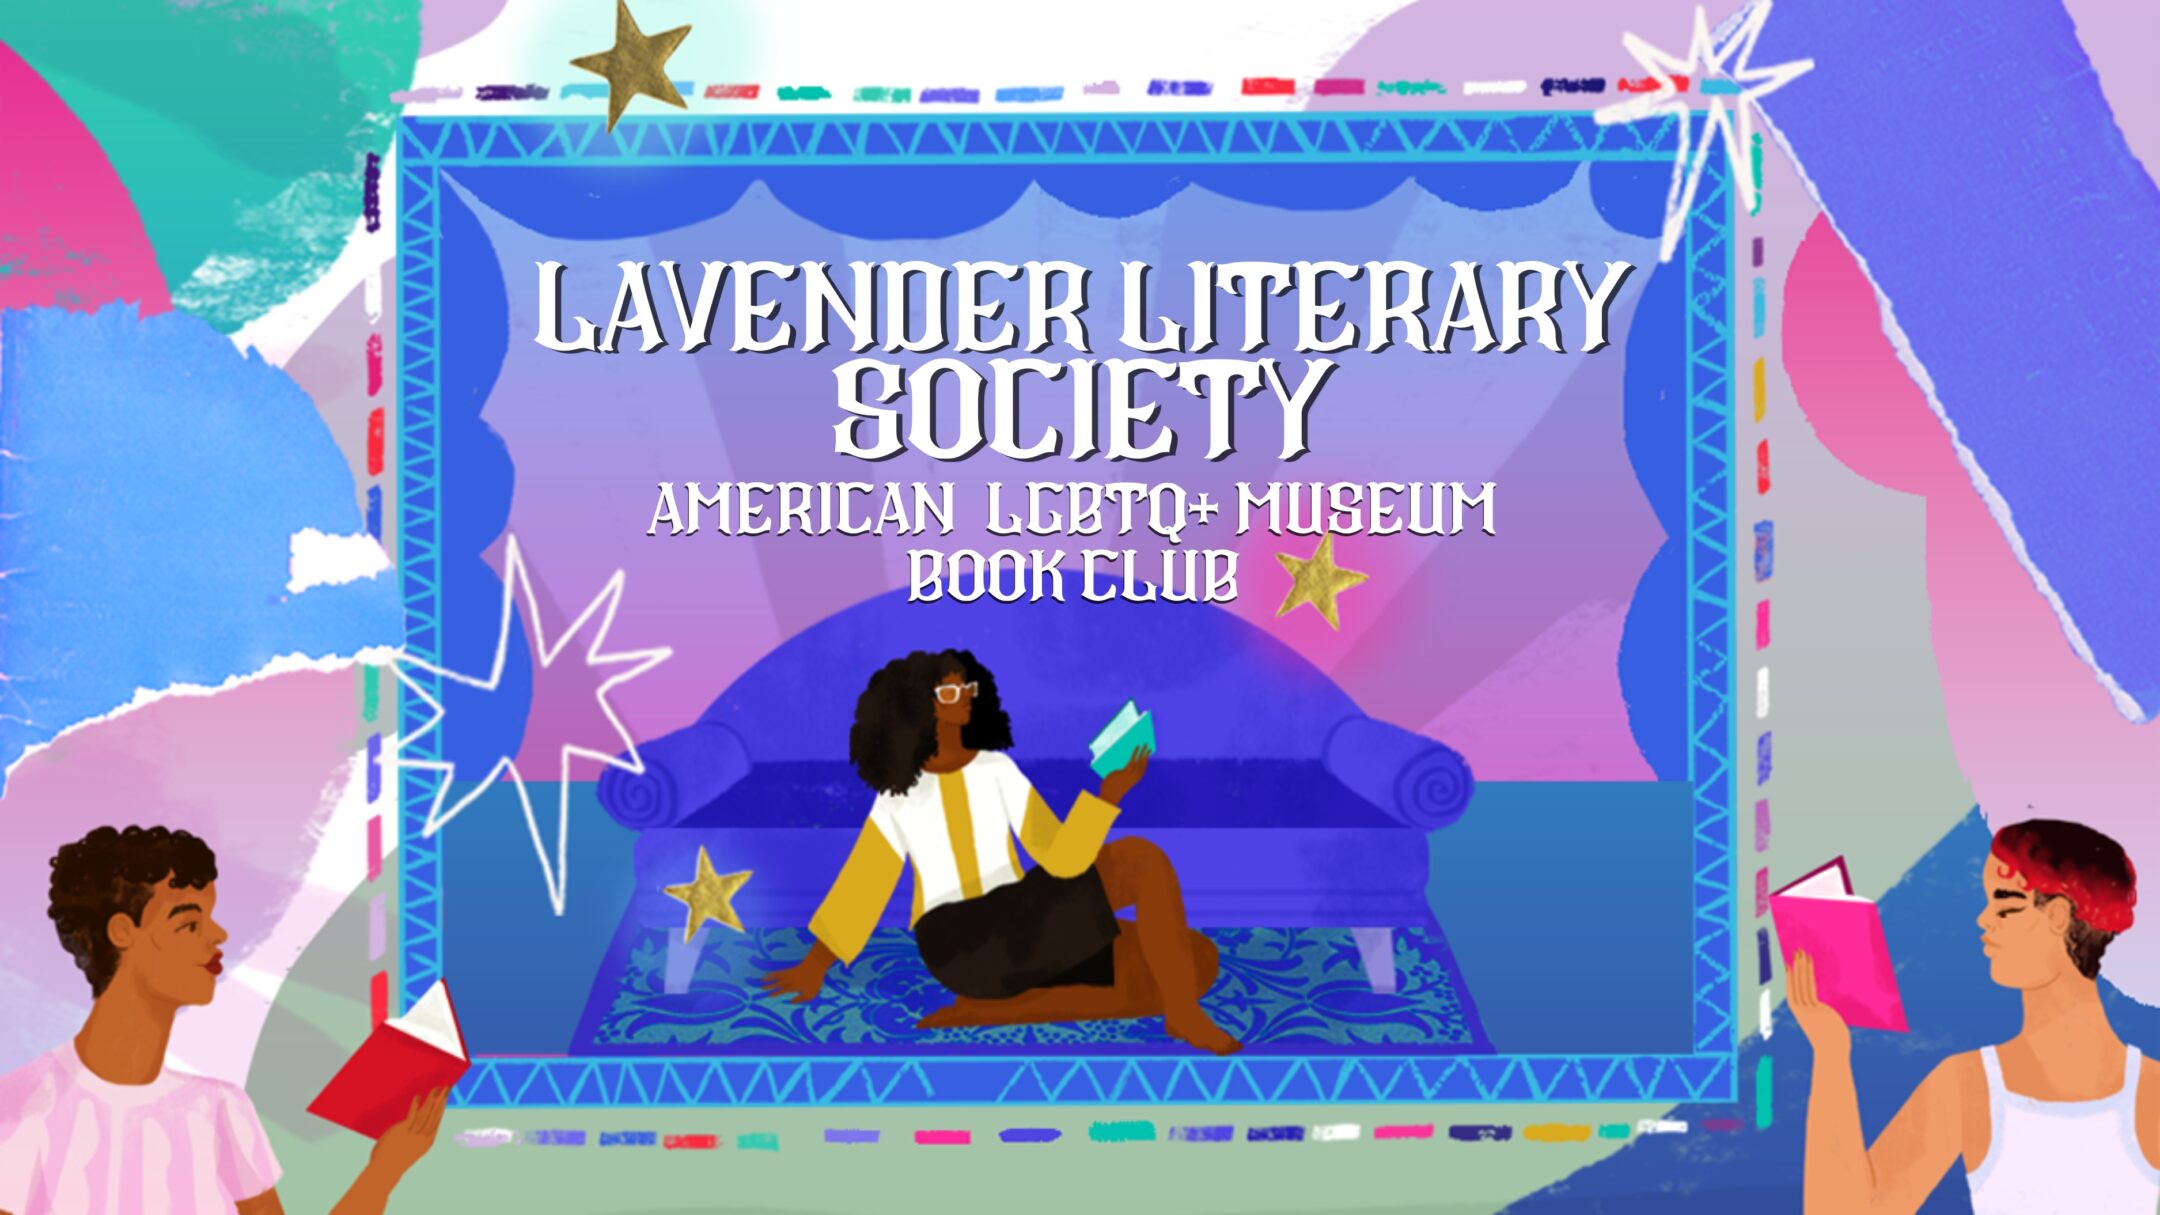 Book Club hero image